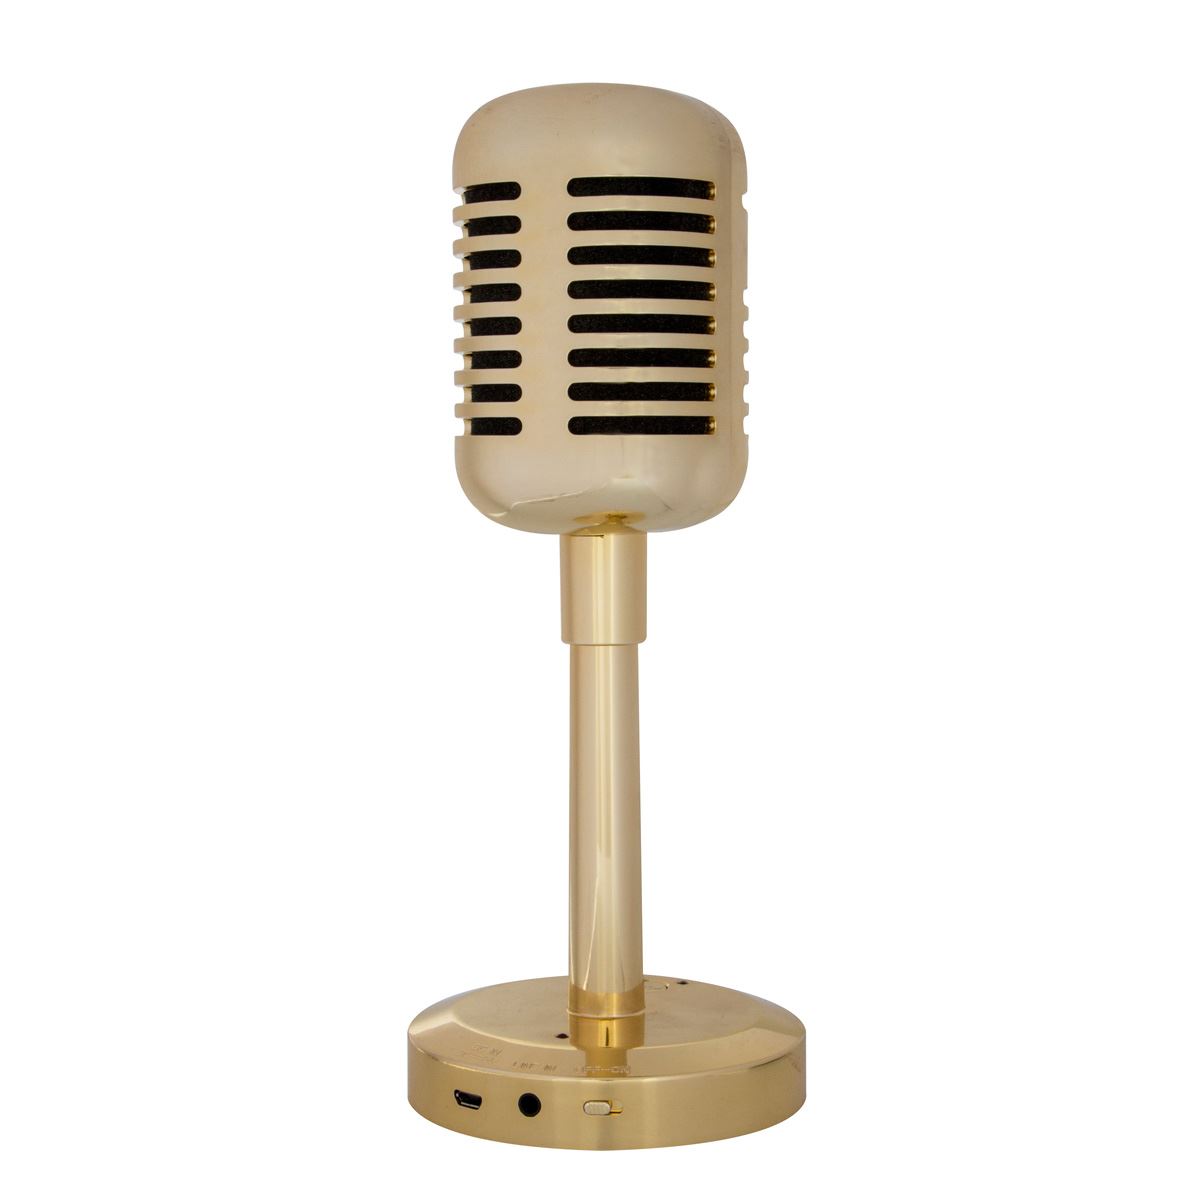 Amigo Kit Alcatel 5010G Pixi 4 5 Dorado R9 + Microfono Bocina